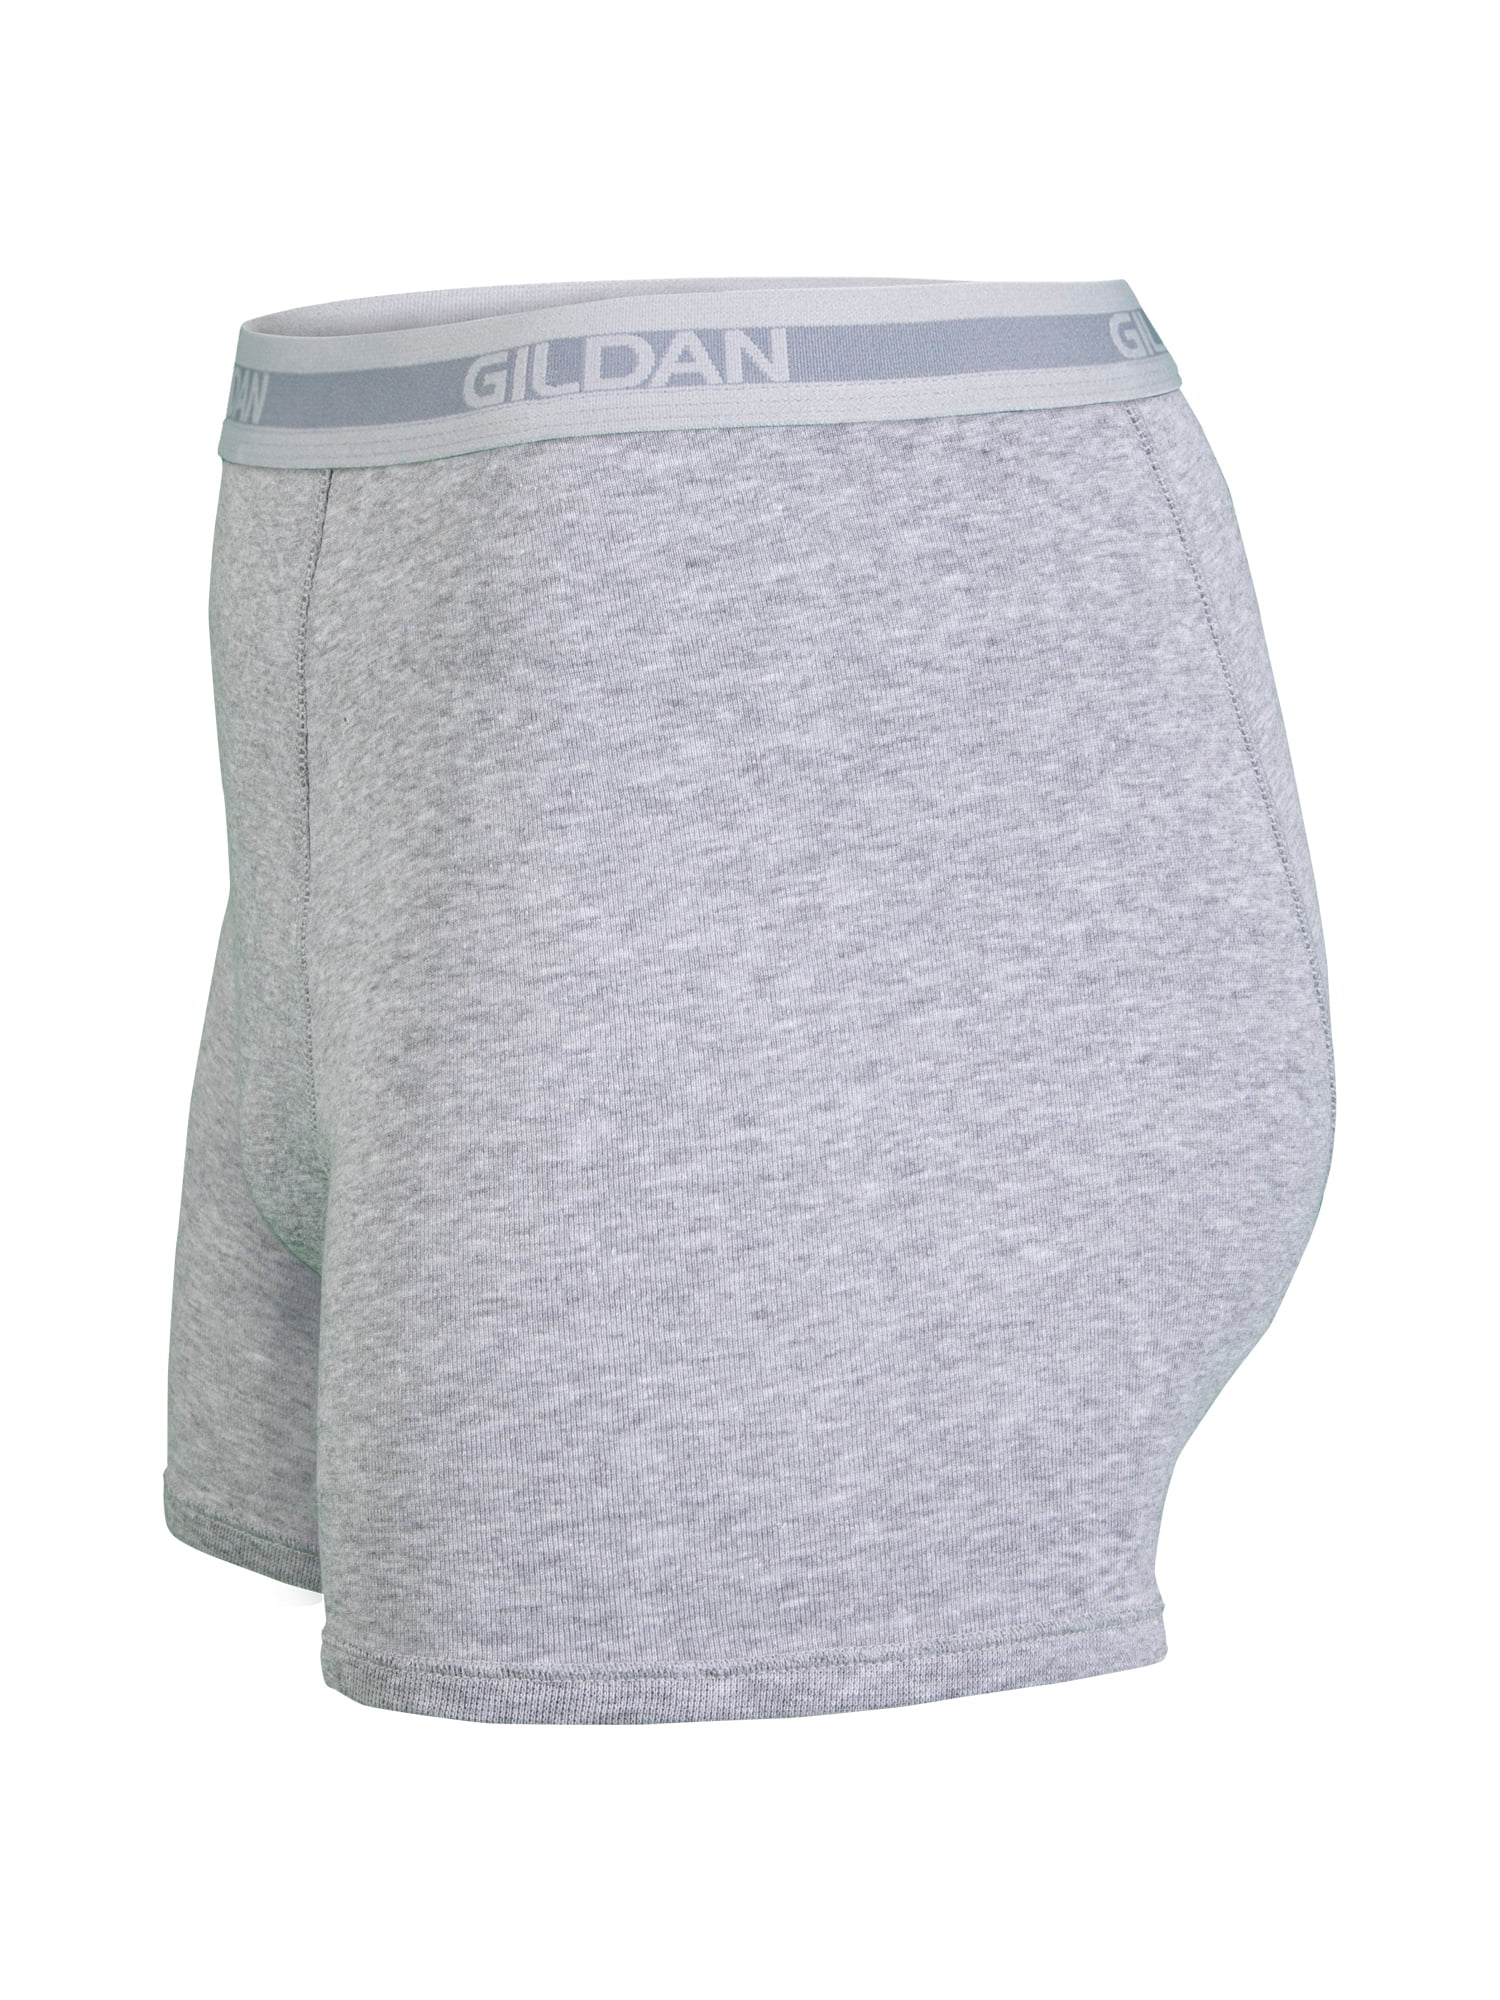 Gildan 5-Pack Men's Underwear Boxer Briefs $11.90 (Reg. $20) - $2.38 each -  Fabulessly Frugal